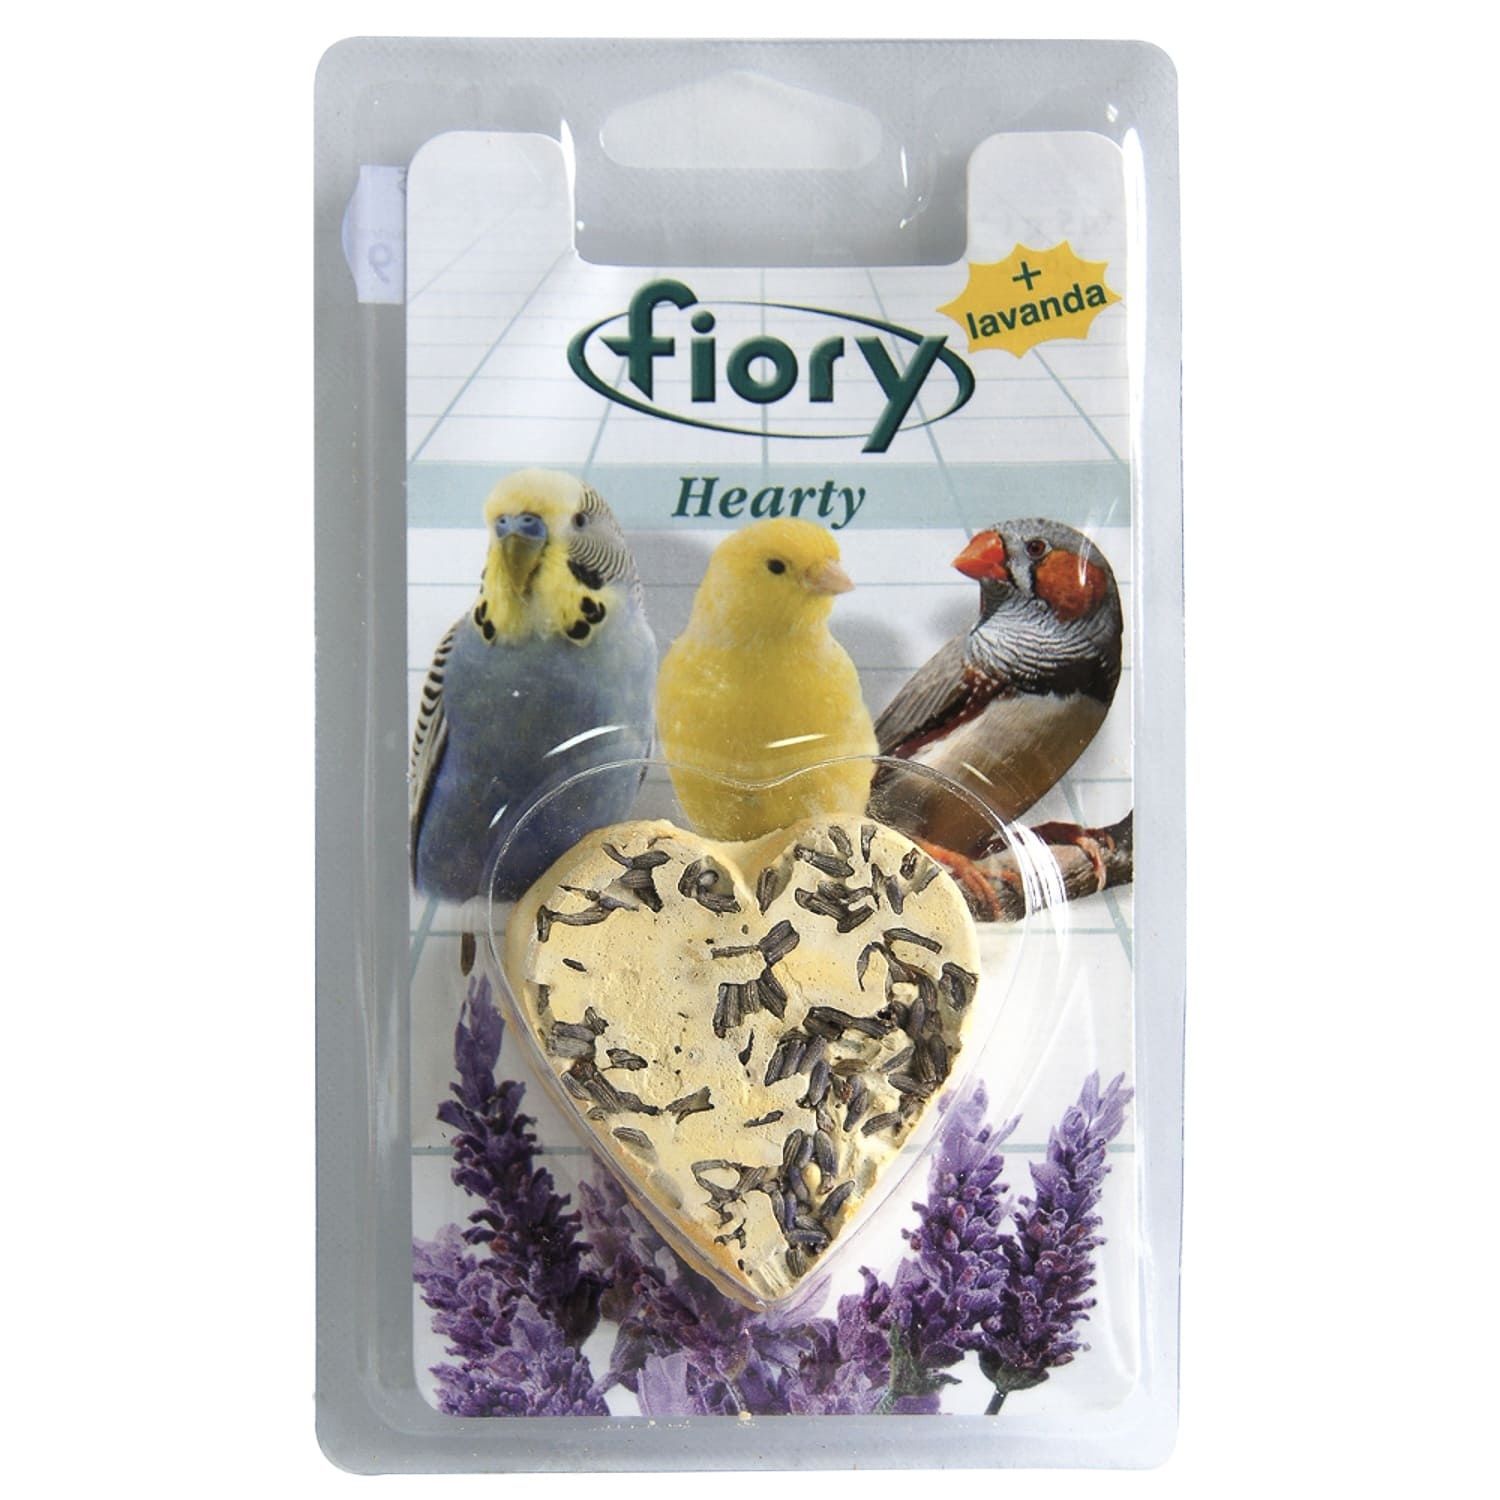 Fiory Fiory био-камень для птиц, с лавандой в форме сердца (45 г) fiory био камень для птиц hearty с лавандой в форме сердца 45 г